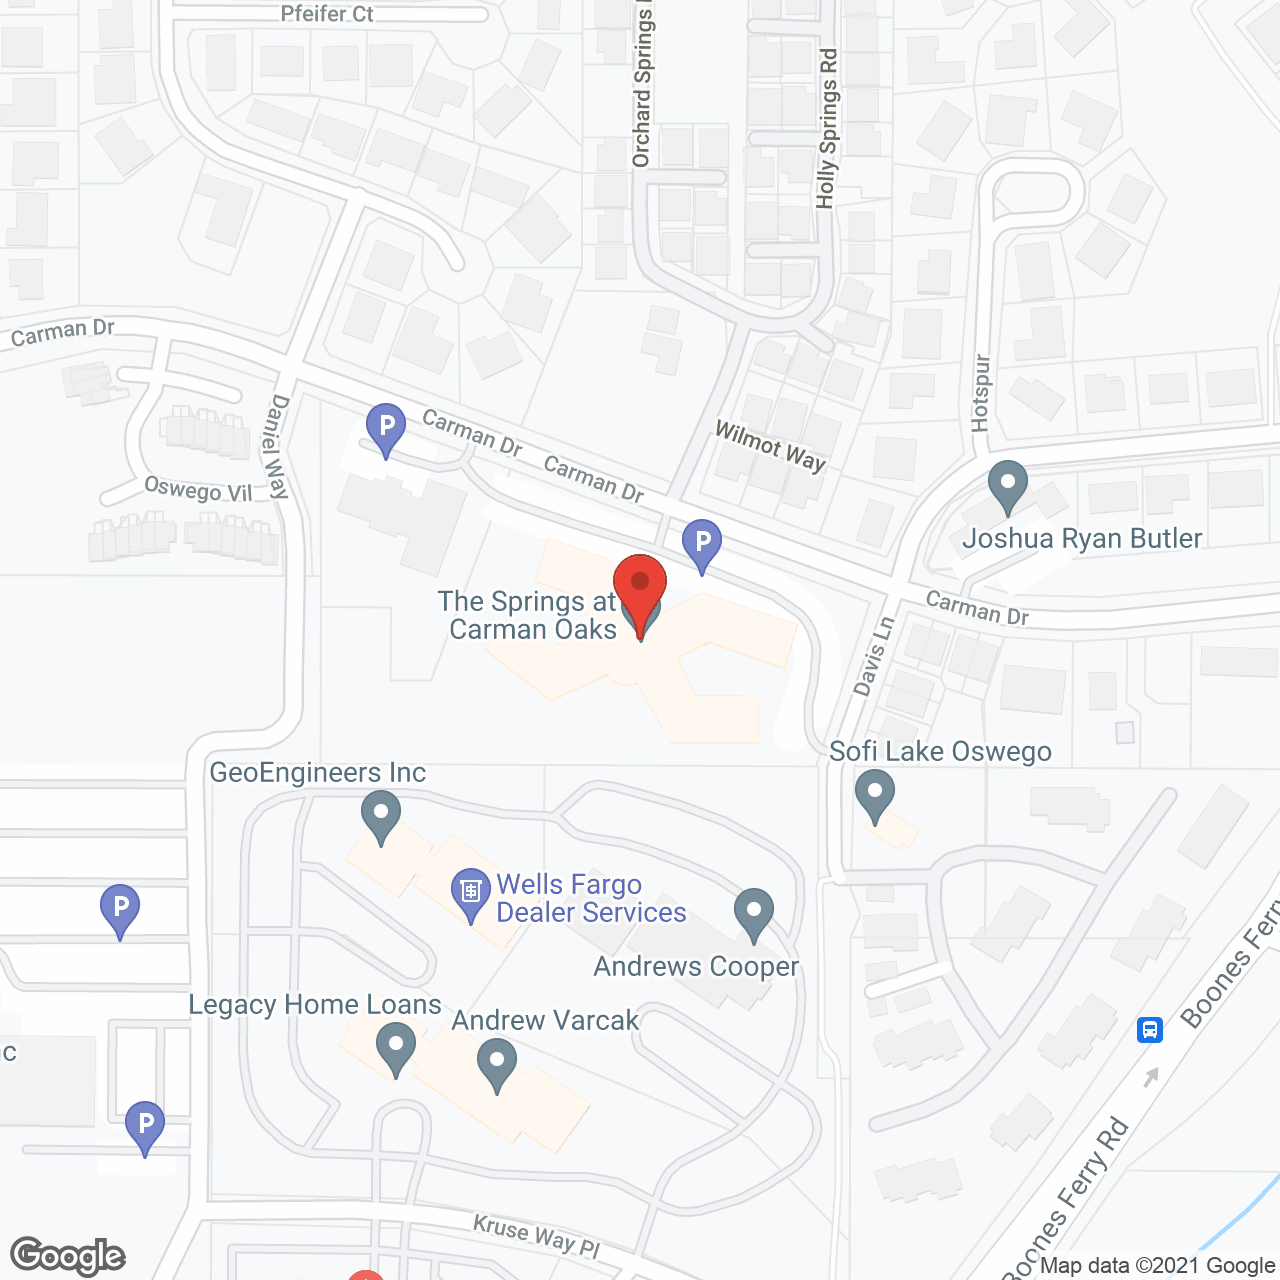 The Springs at Carman Oaks in google map